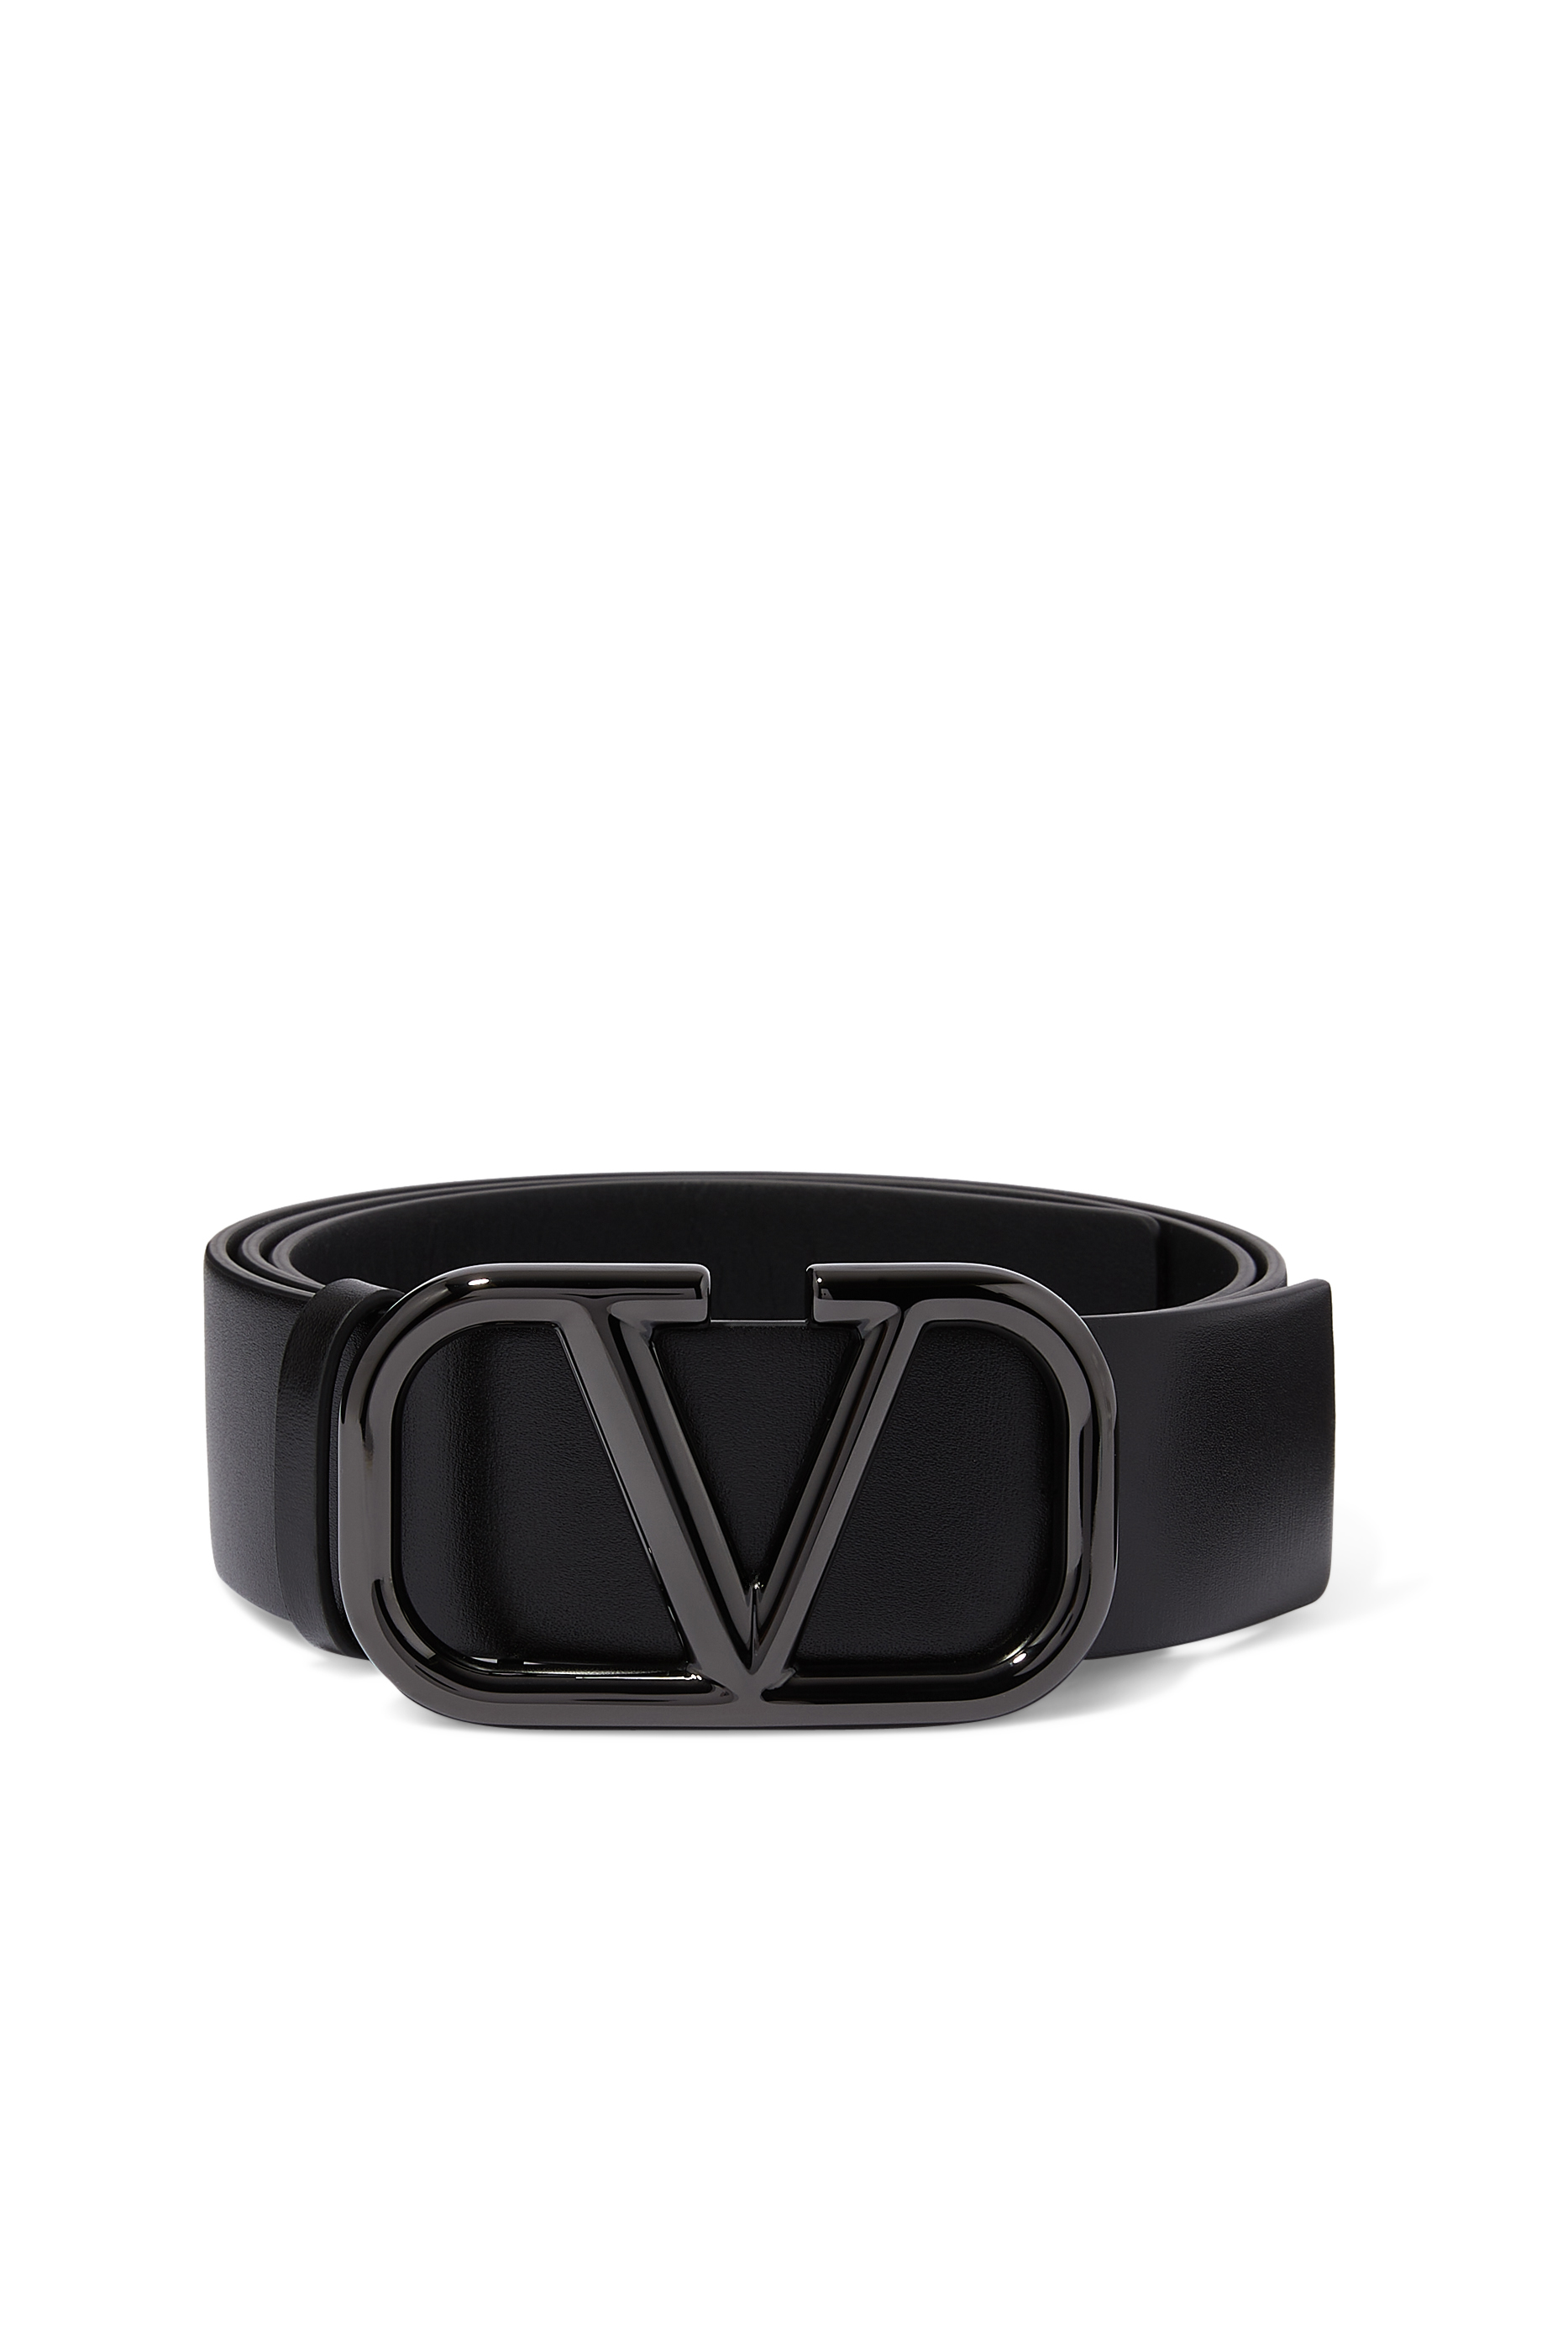 Buy Valentino Valentino Garavani VLogo Leather Belt - Womens for SAR